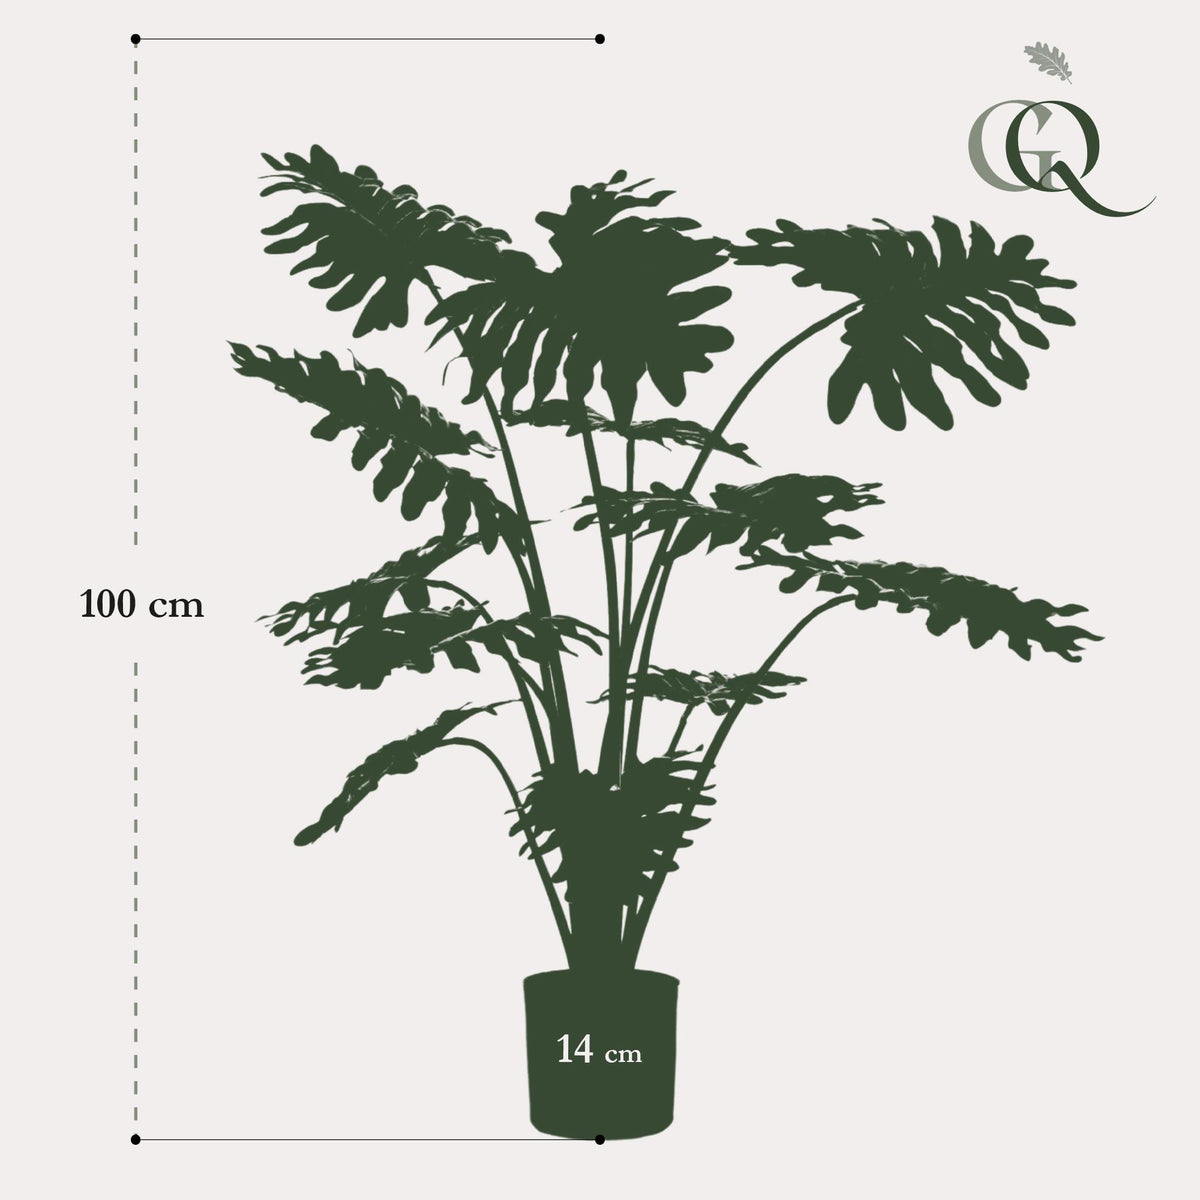 Kunstplant - Philodendron - 85 cm